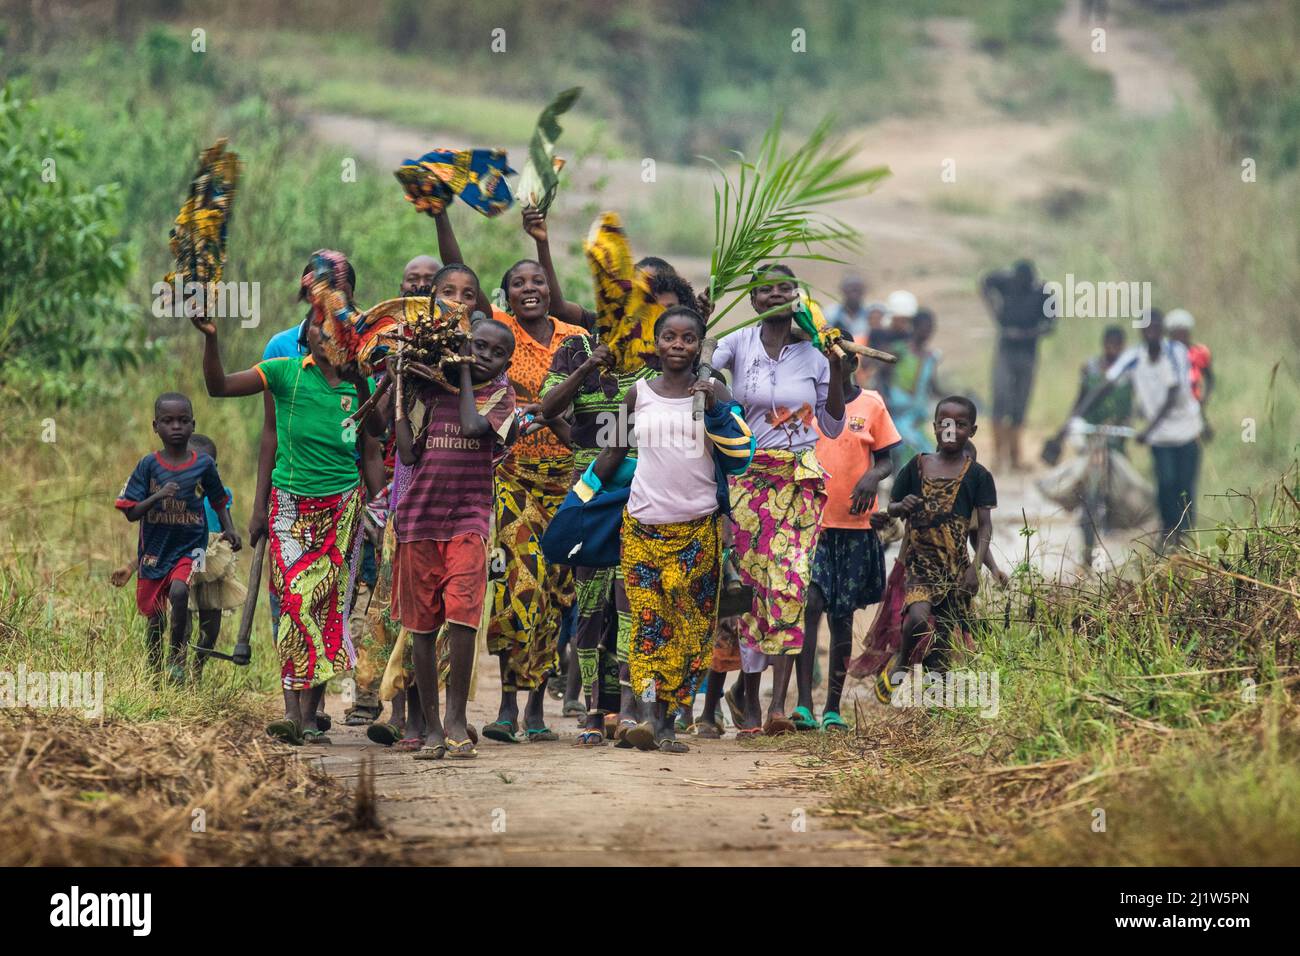 Women and children walking along road carrying fire wood and waving, Democratic Republic of Congo. May 2017. Stock Photo